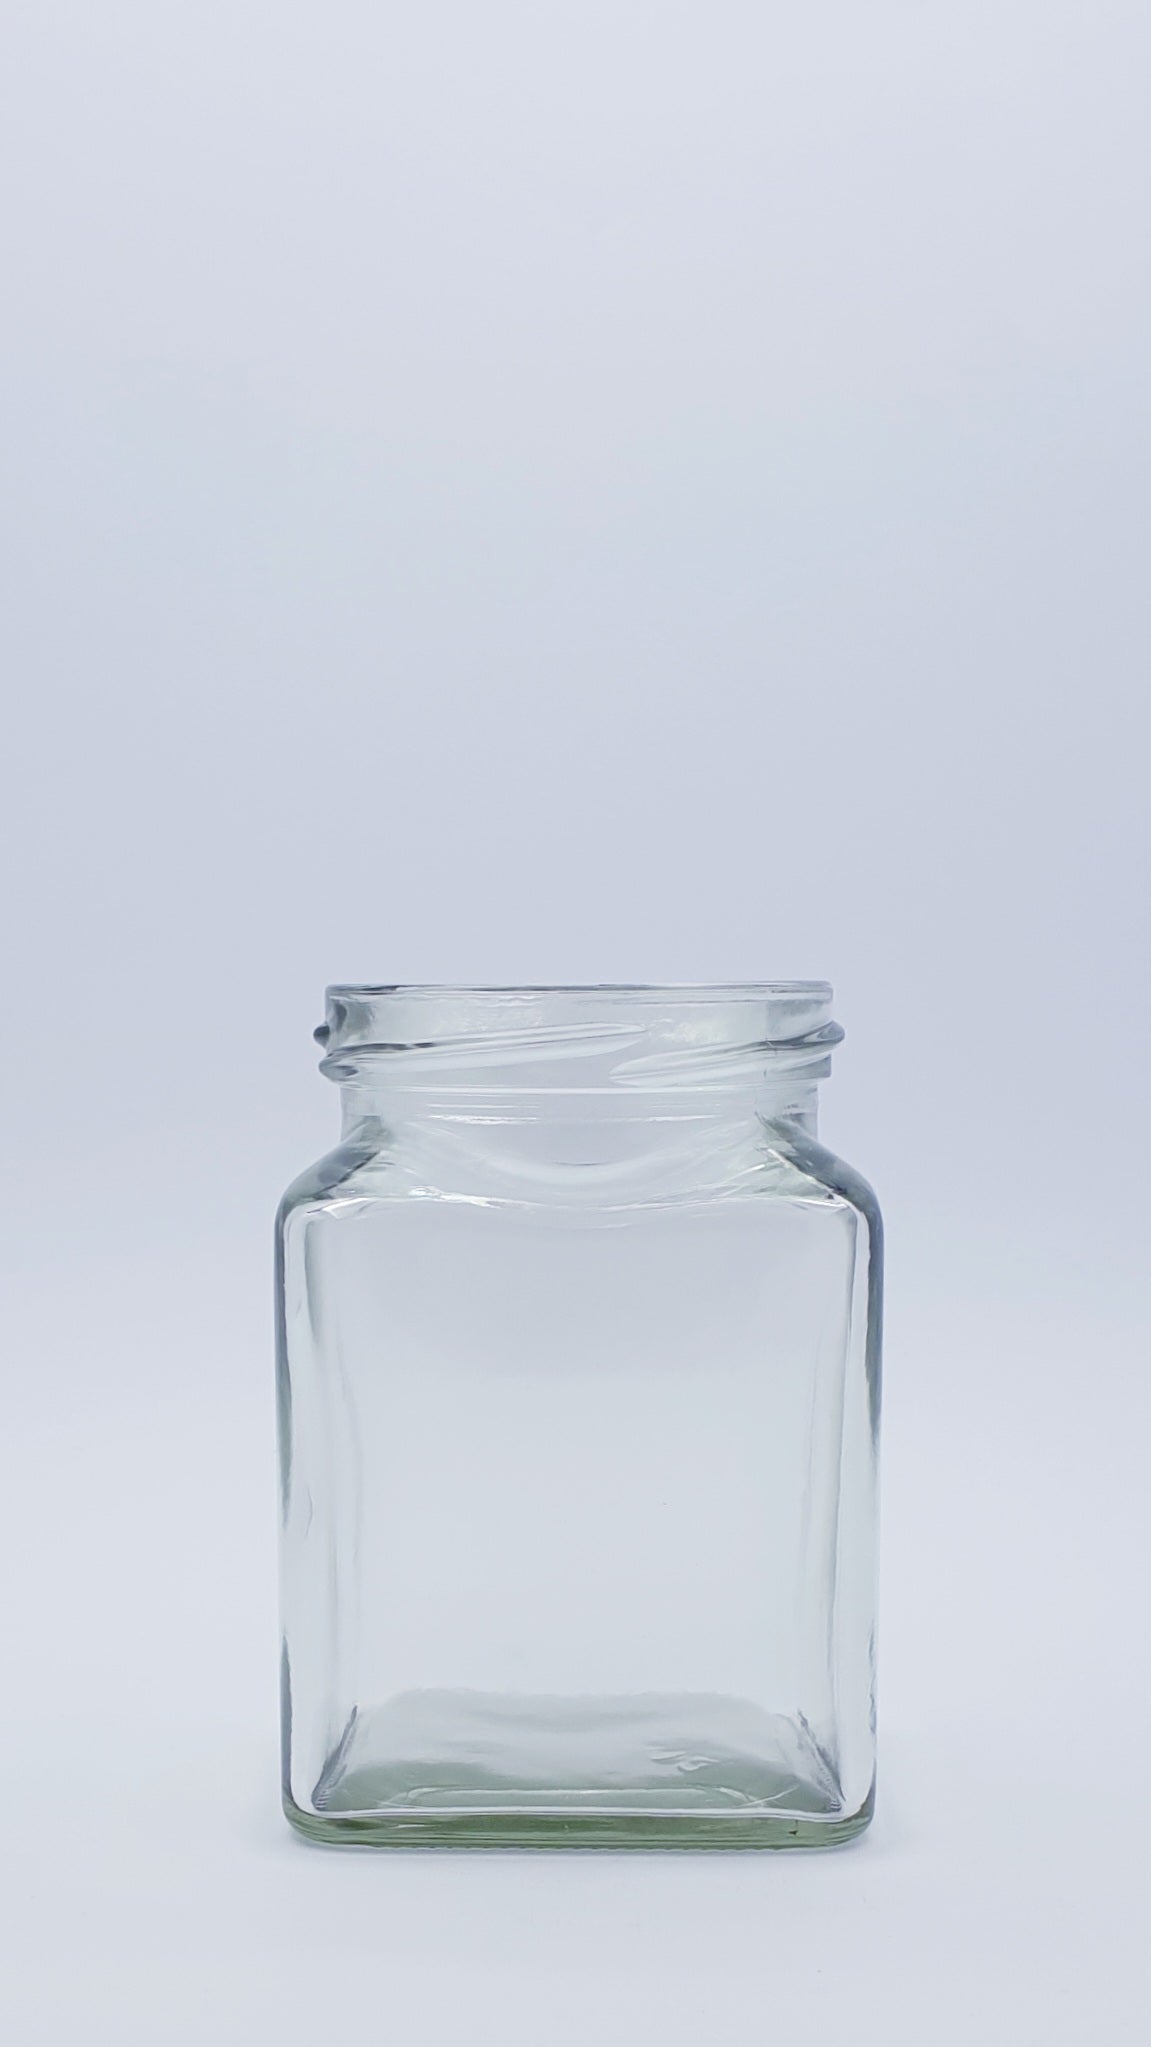 270ml Square Glass Jar with 63mm Twist Cap - 48 Jars and Caps Per Carton - Unit Cost $1.59c Each (Jar/Capcombo)